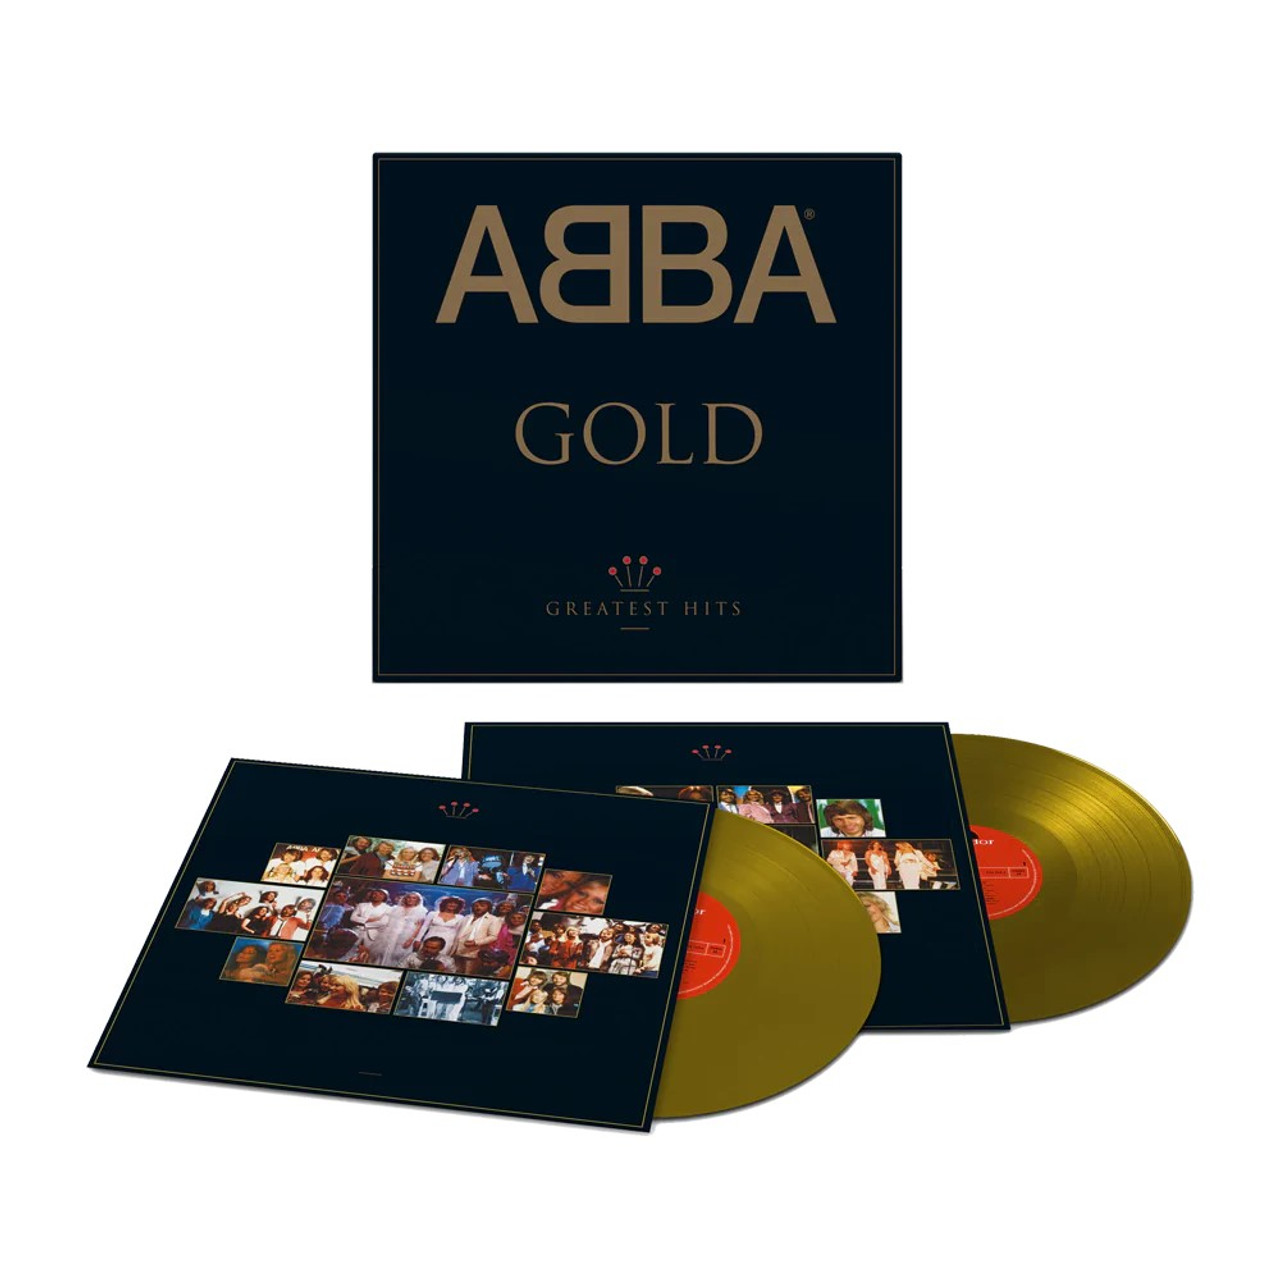  Queen Greatest Hits III 2 LP gold Vinyl - auction details